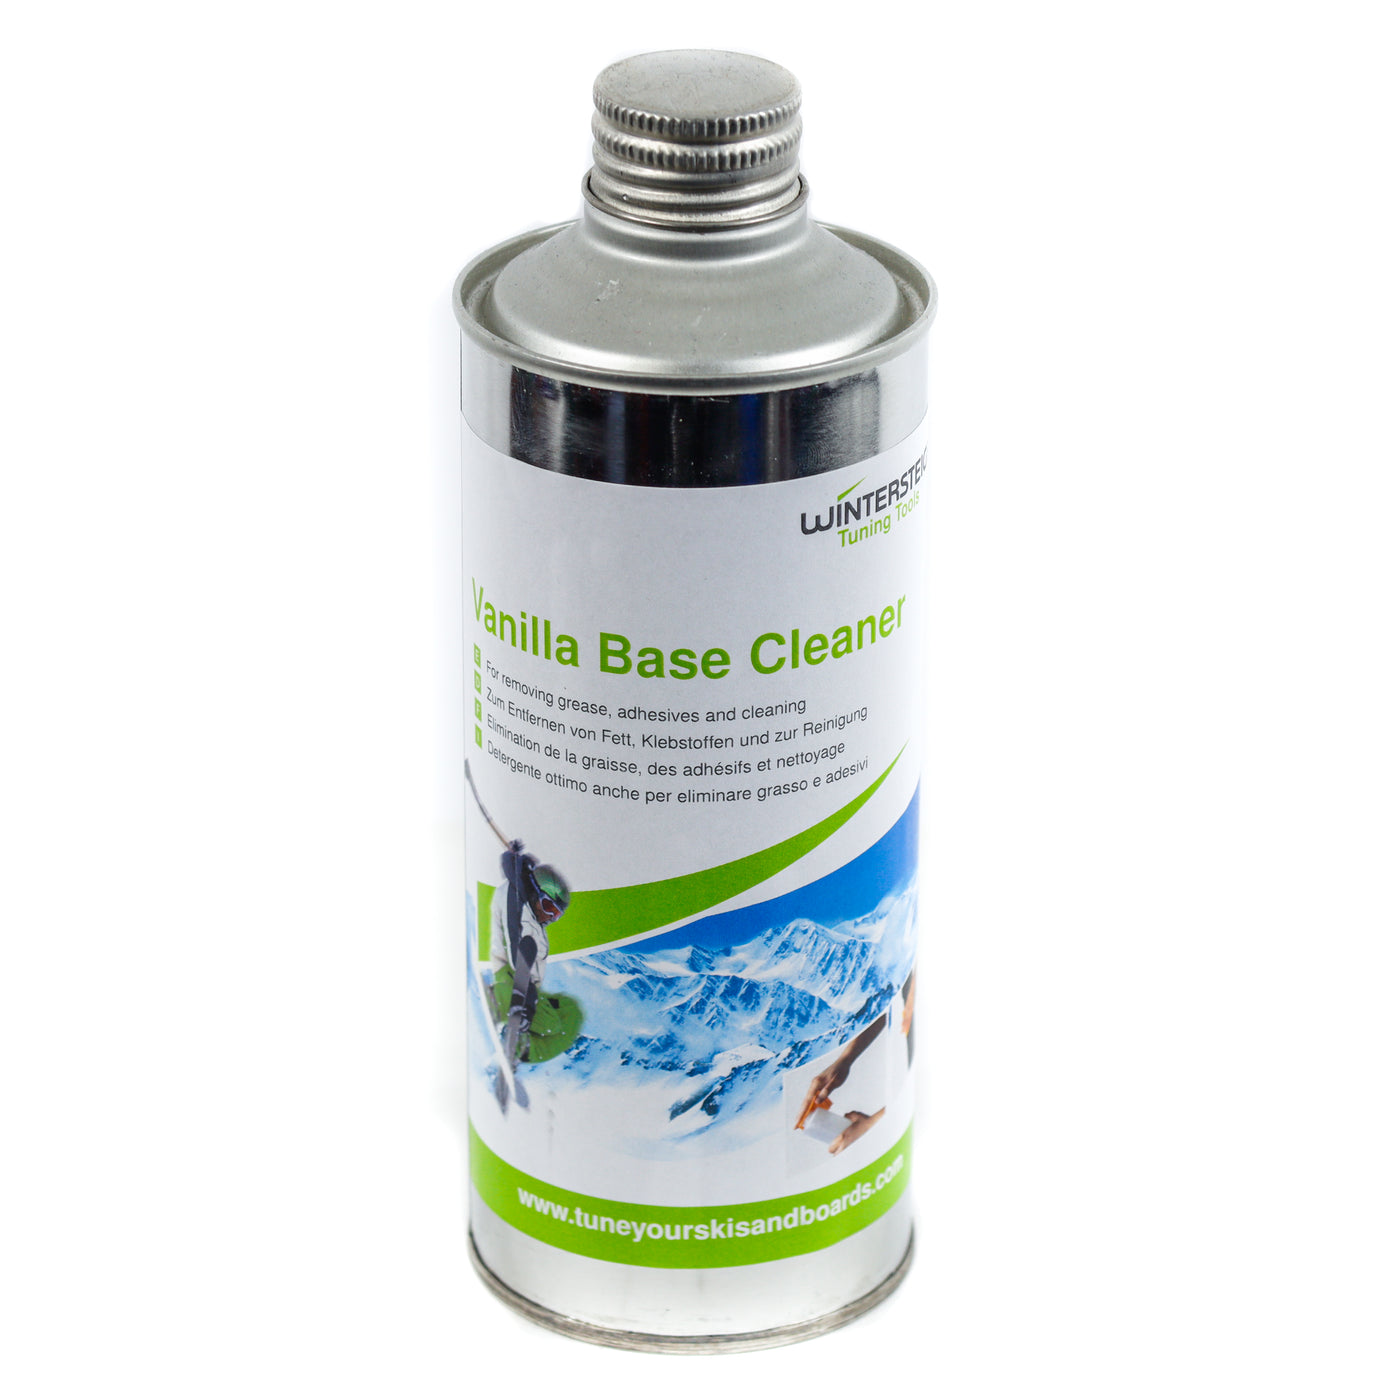 Wintersteiger Citrus Base Cleaner | Ski Wax Remover